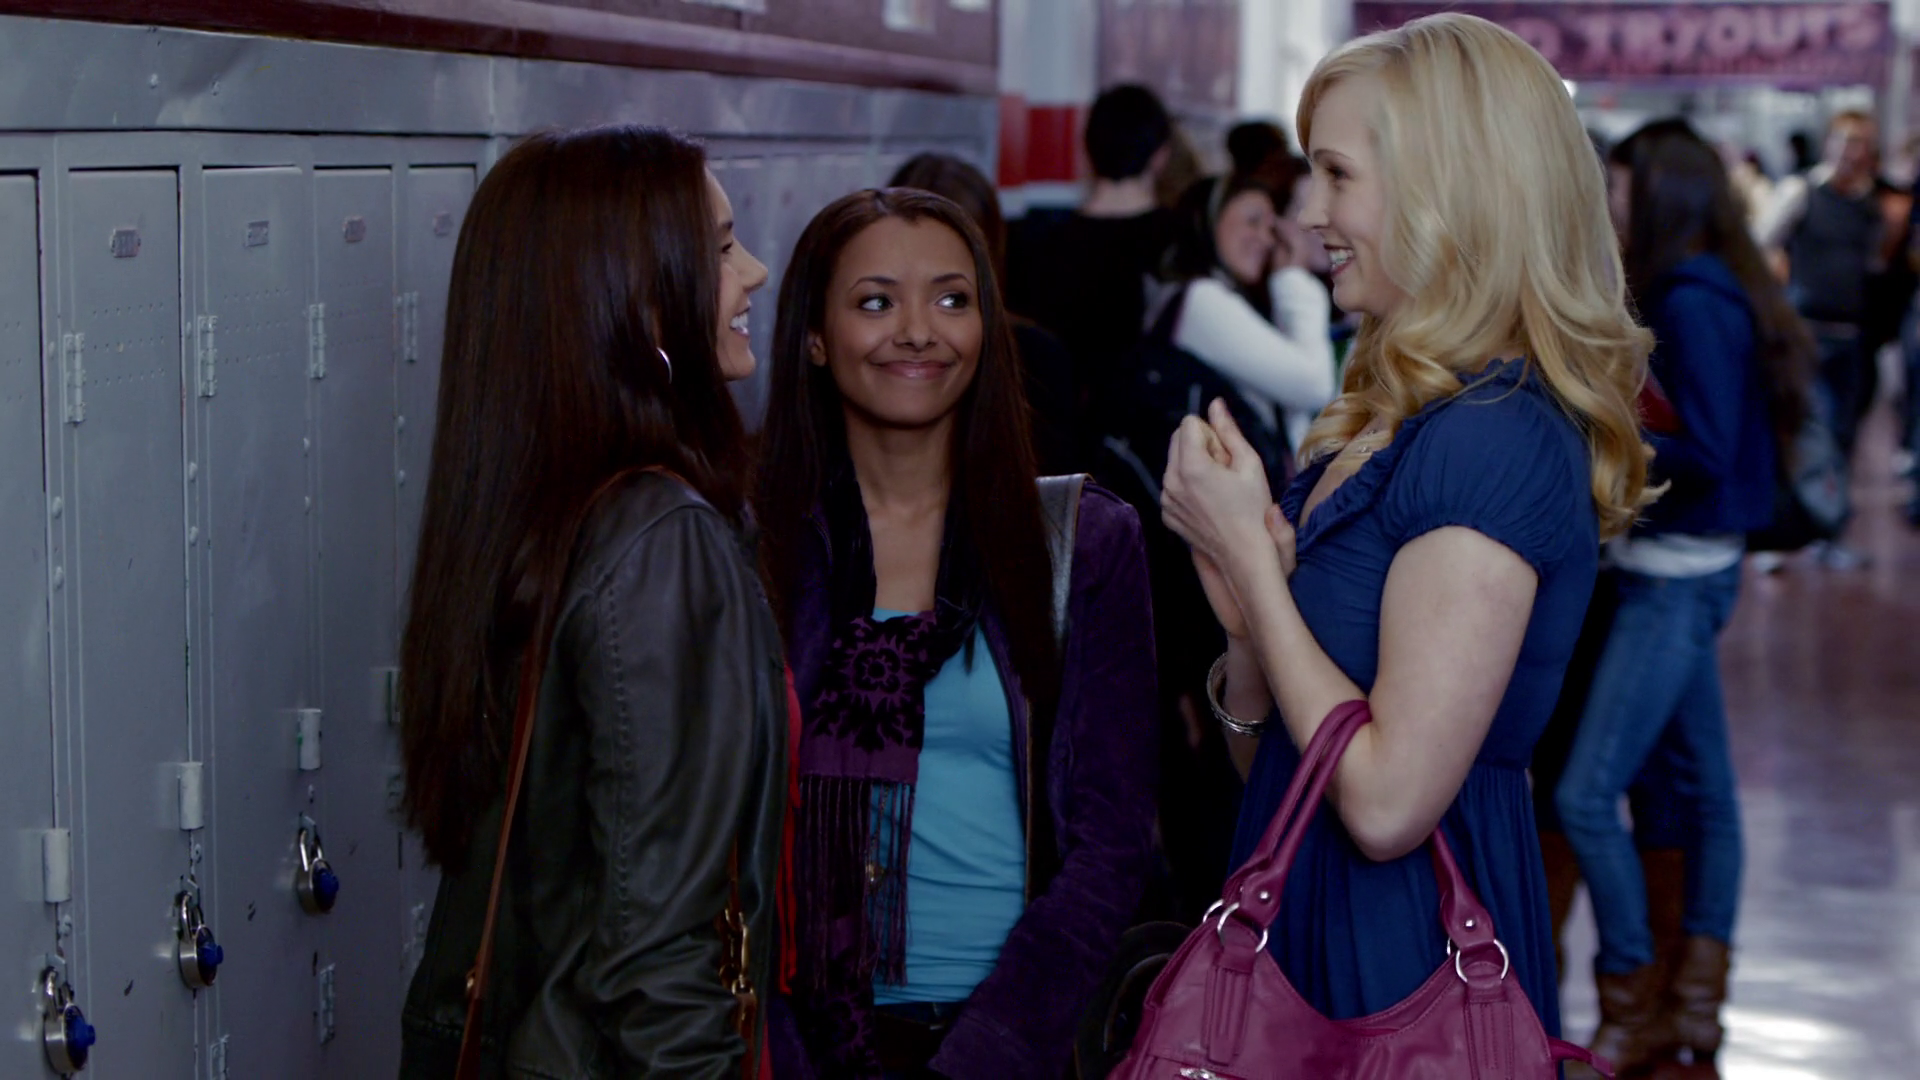 Elena, Bonnie and Caroline talking at school on The Vampire Diaries